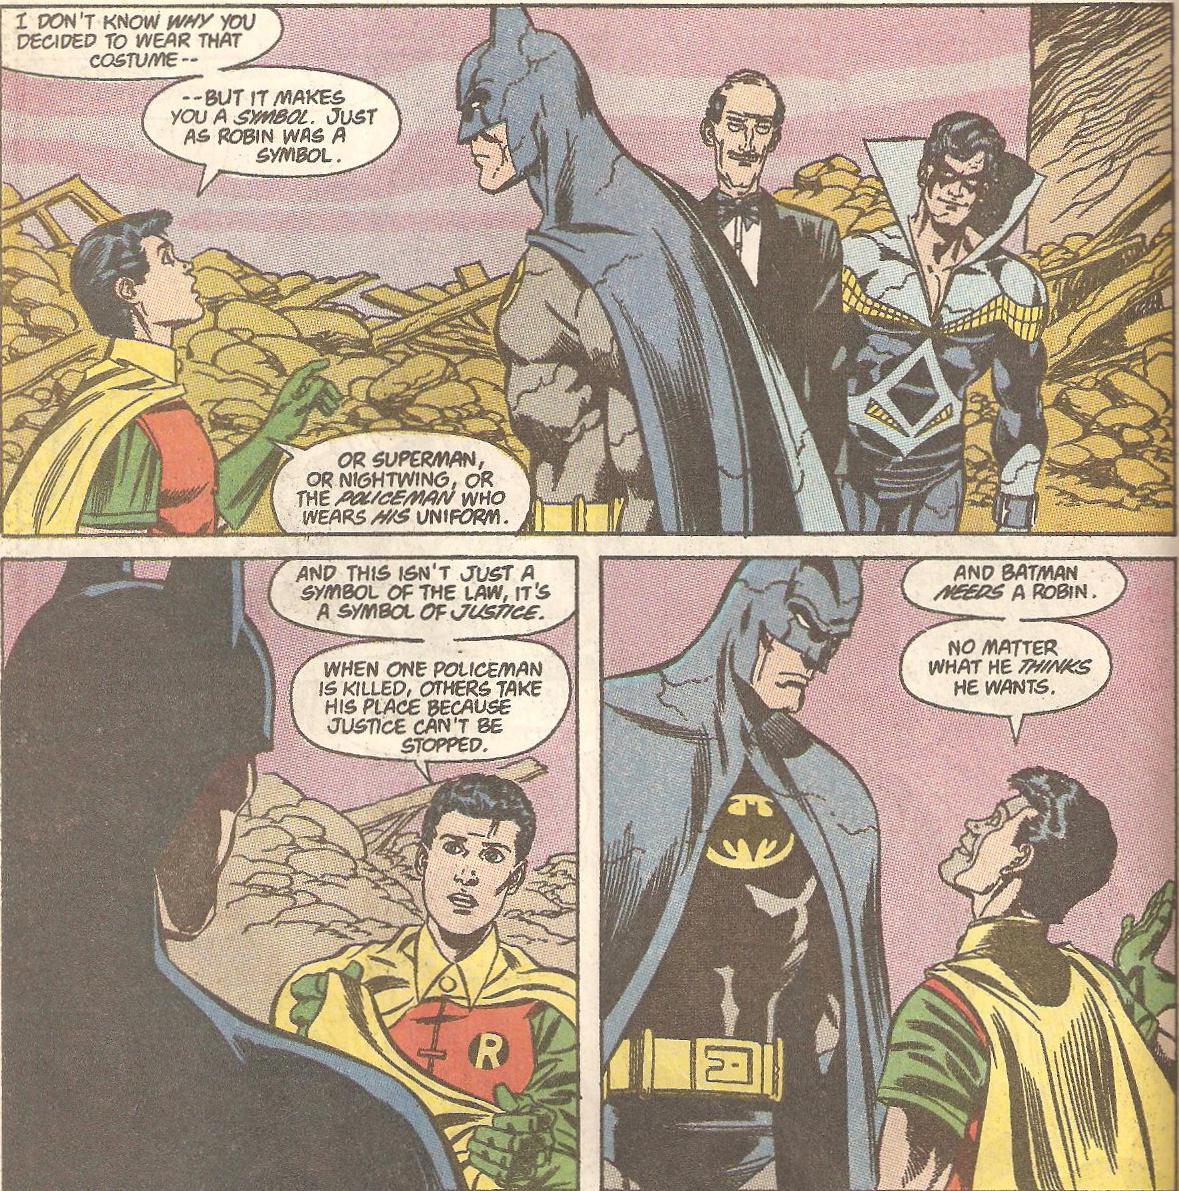 http://ifanboy.com/wp-content/uploads/2011/12/Batman-Vol.-1-442-1989.jpg